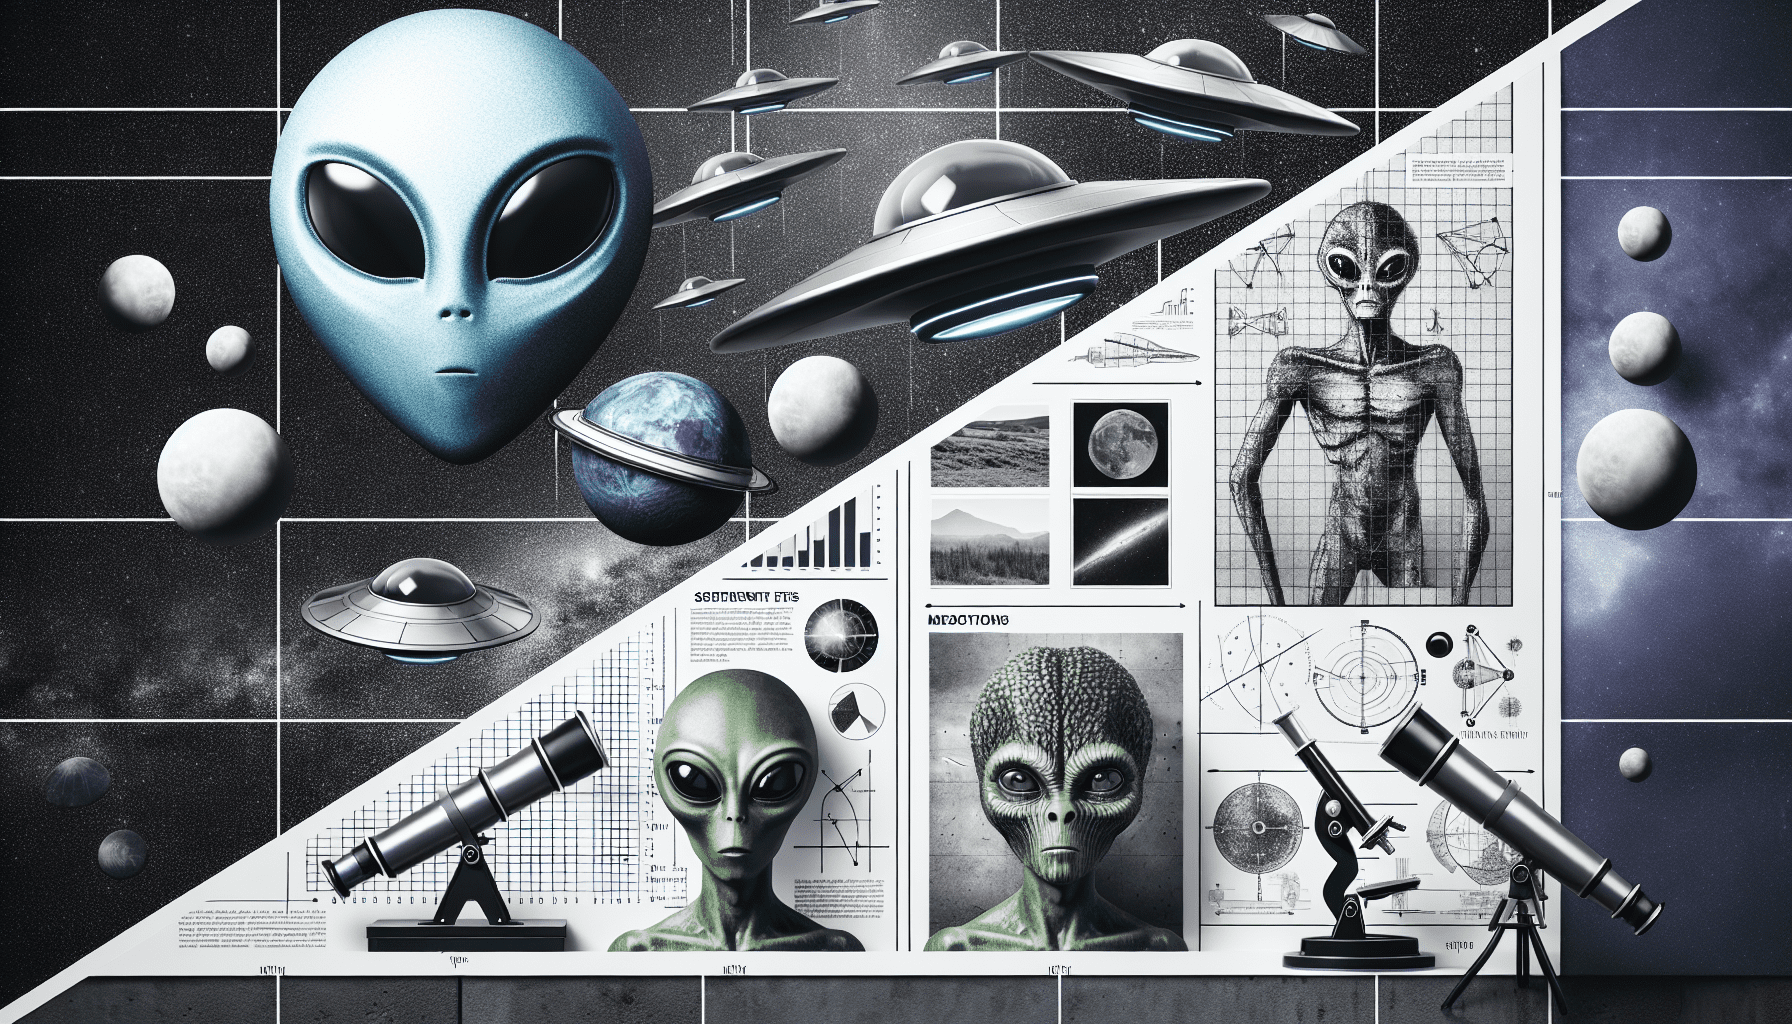 Alien Encounters: Myths Vs. Reality